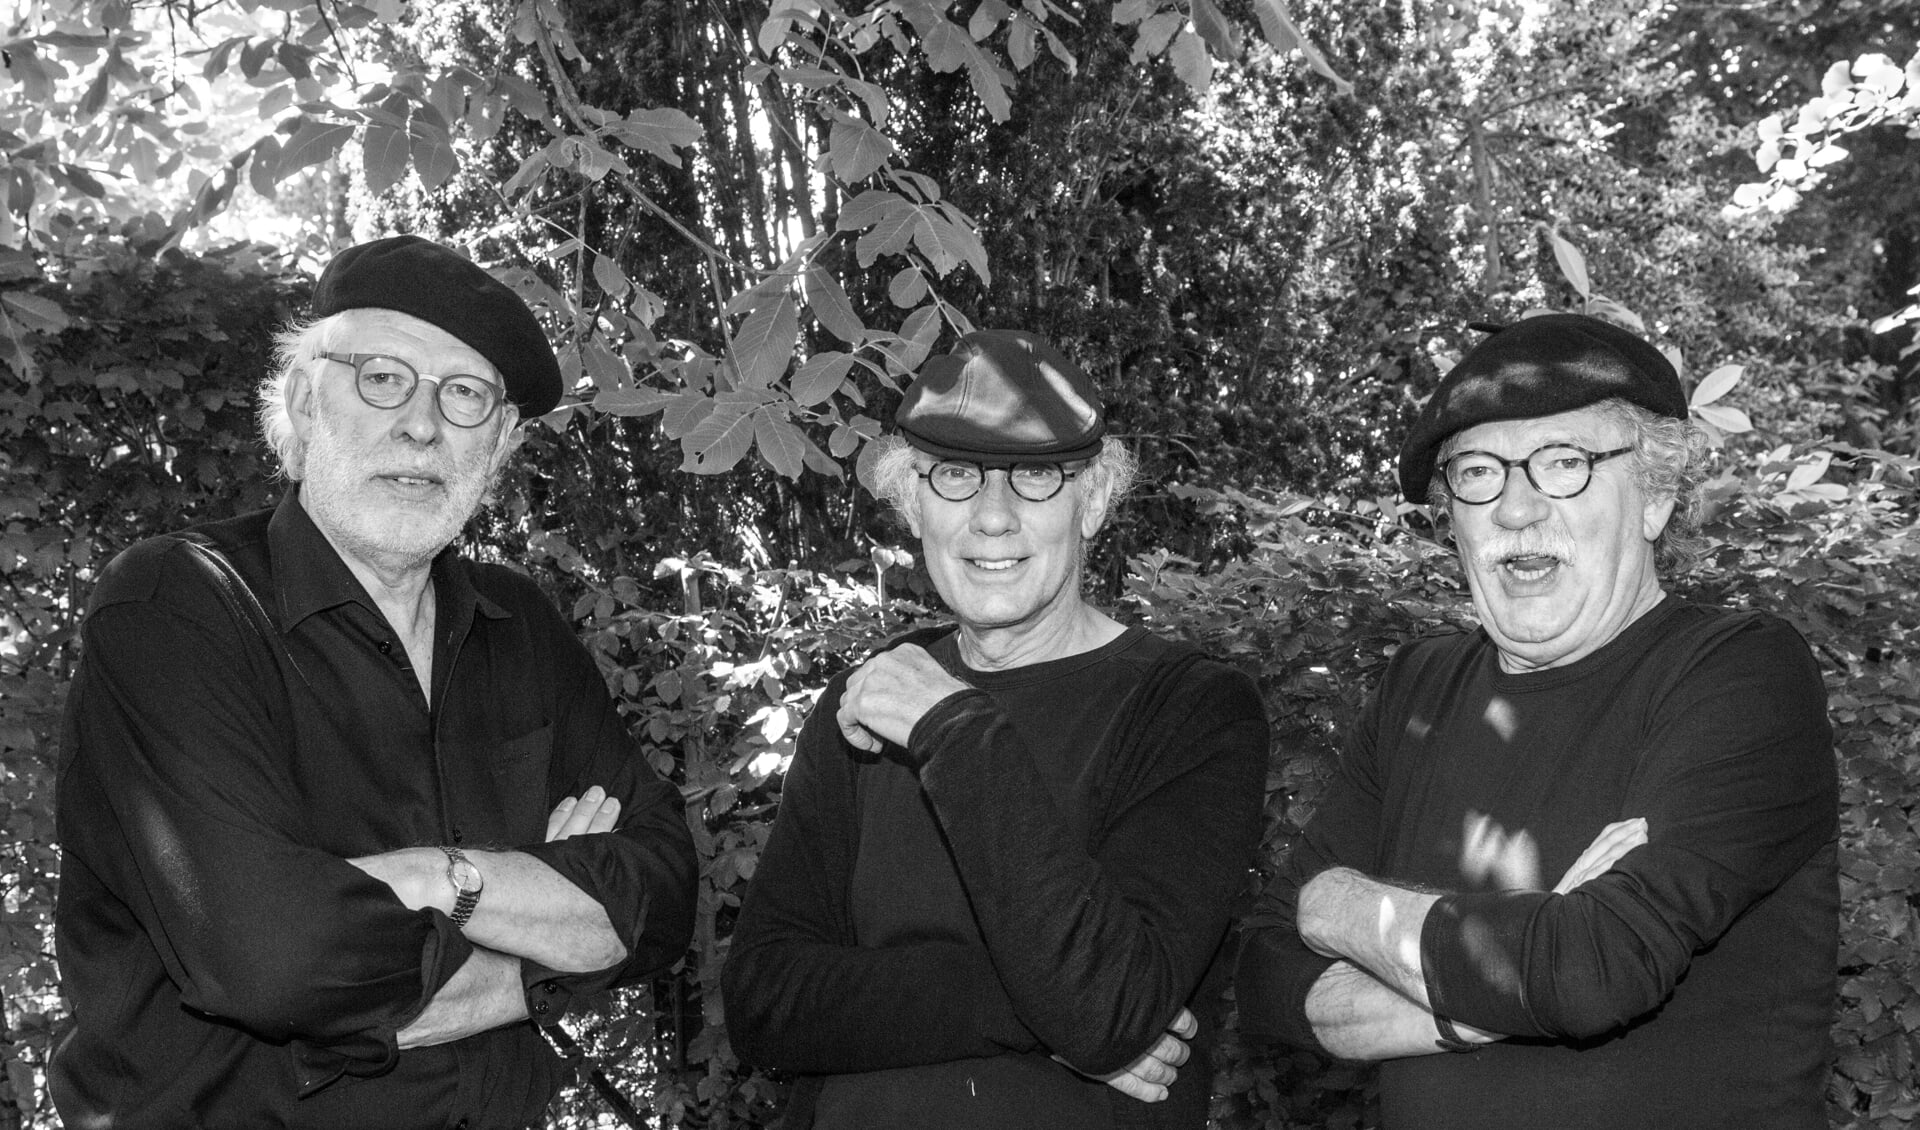 Bugter, Blijenberg en van Bloois, kortweg BuBLBL, troubadours inc. Foto: Arie Cijfer